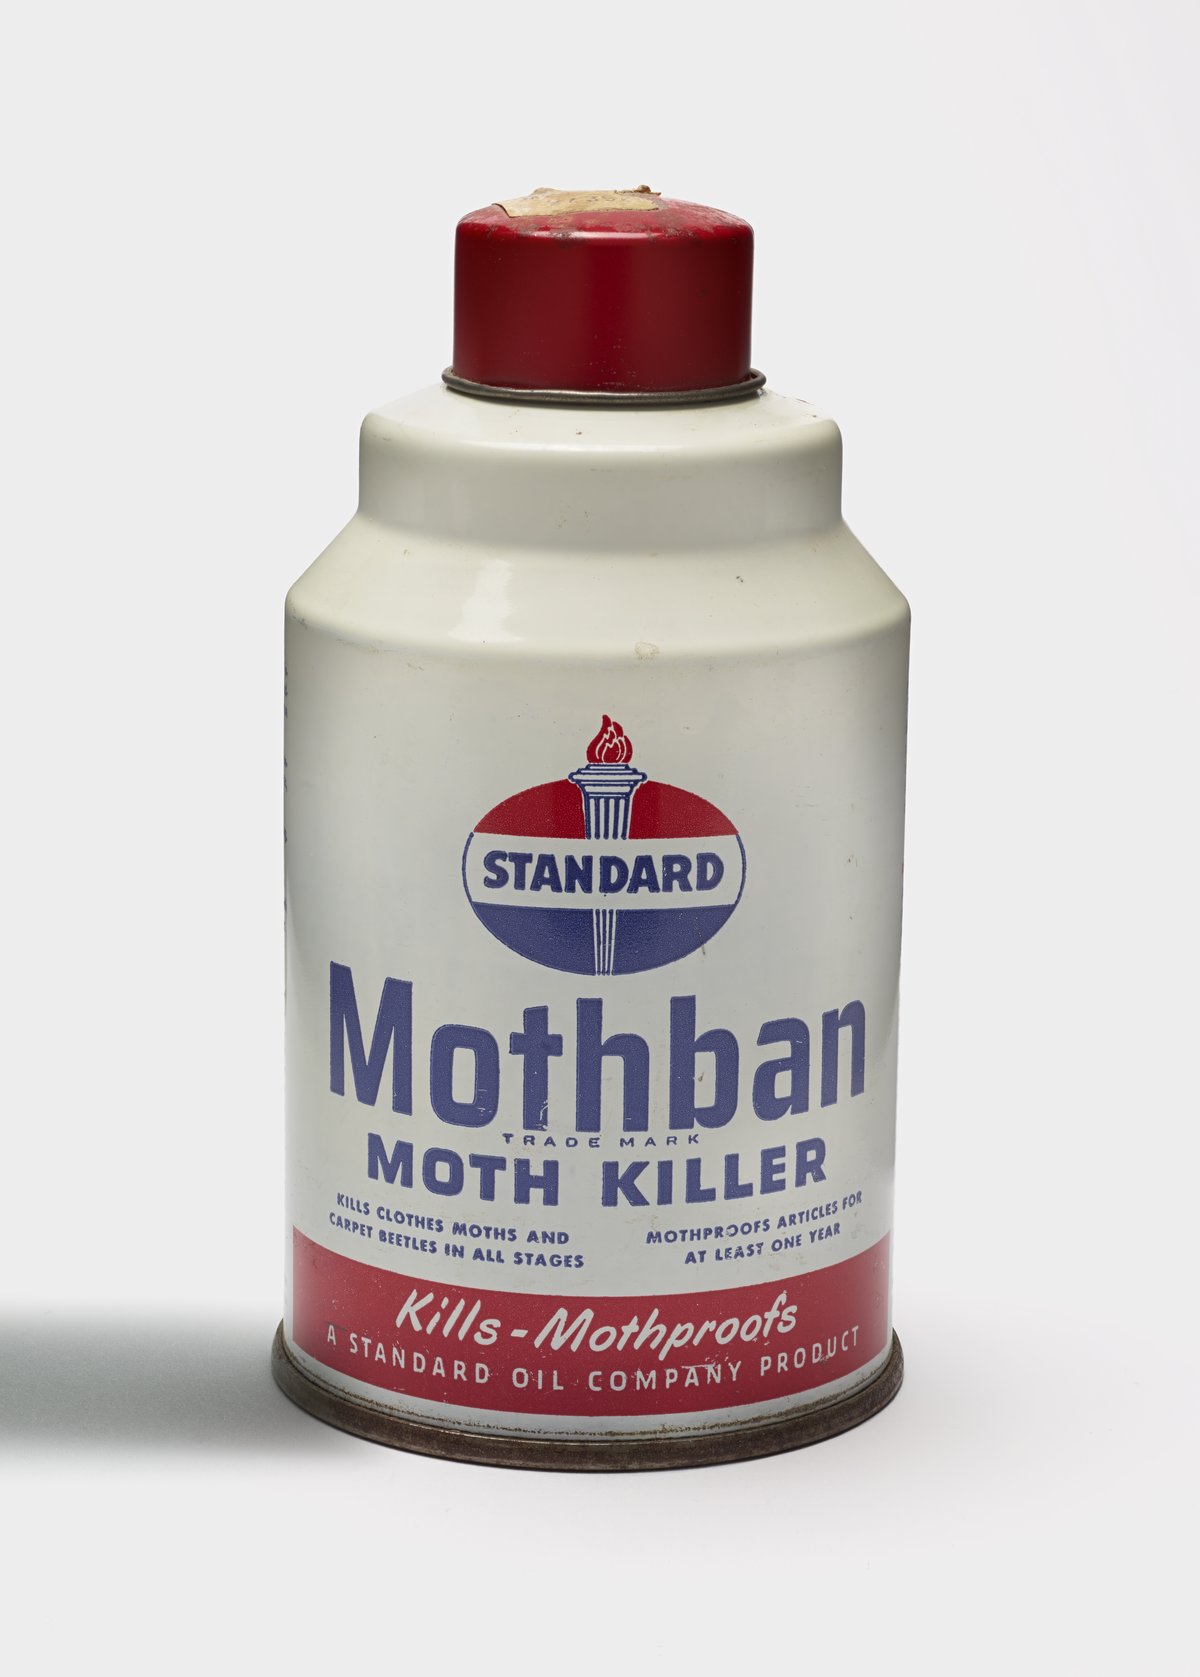 Standard Mothban Moth Killer - Science History Institute Digital